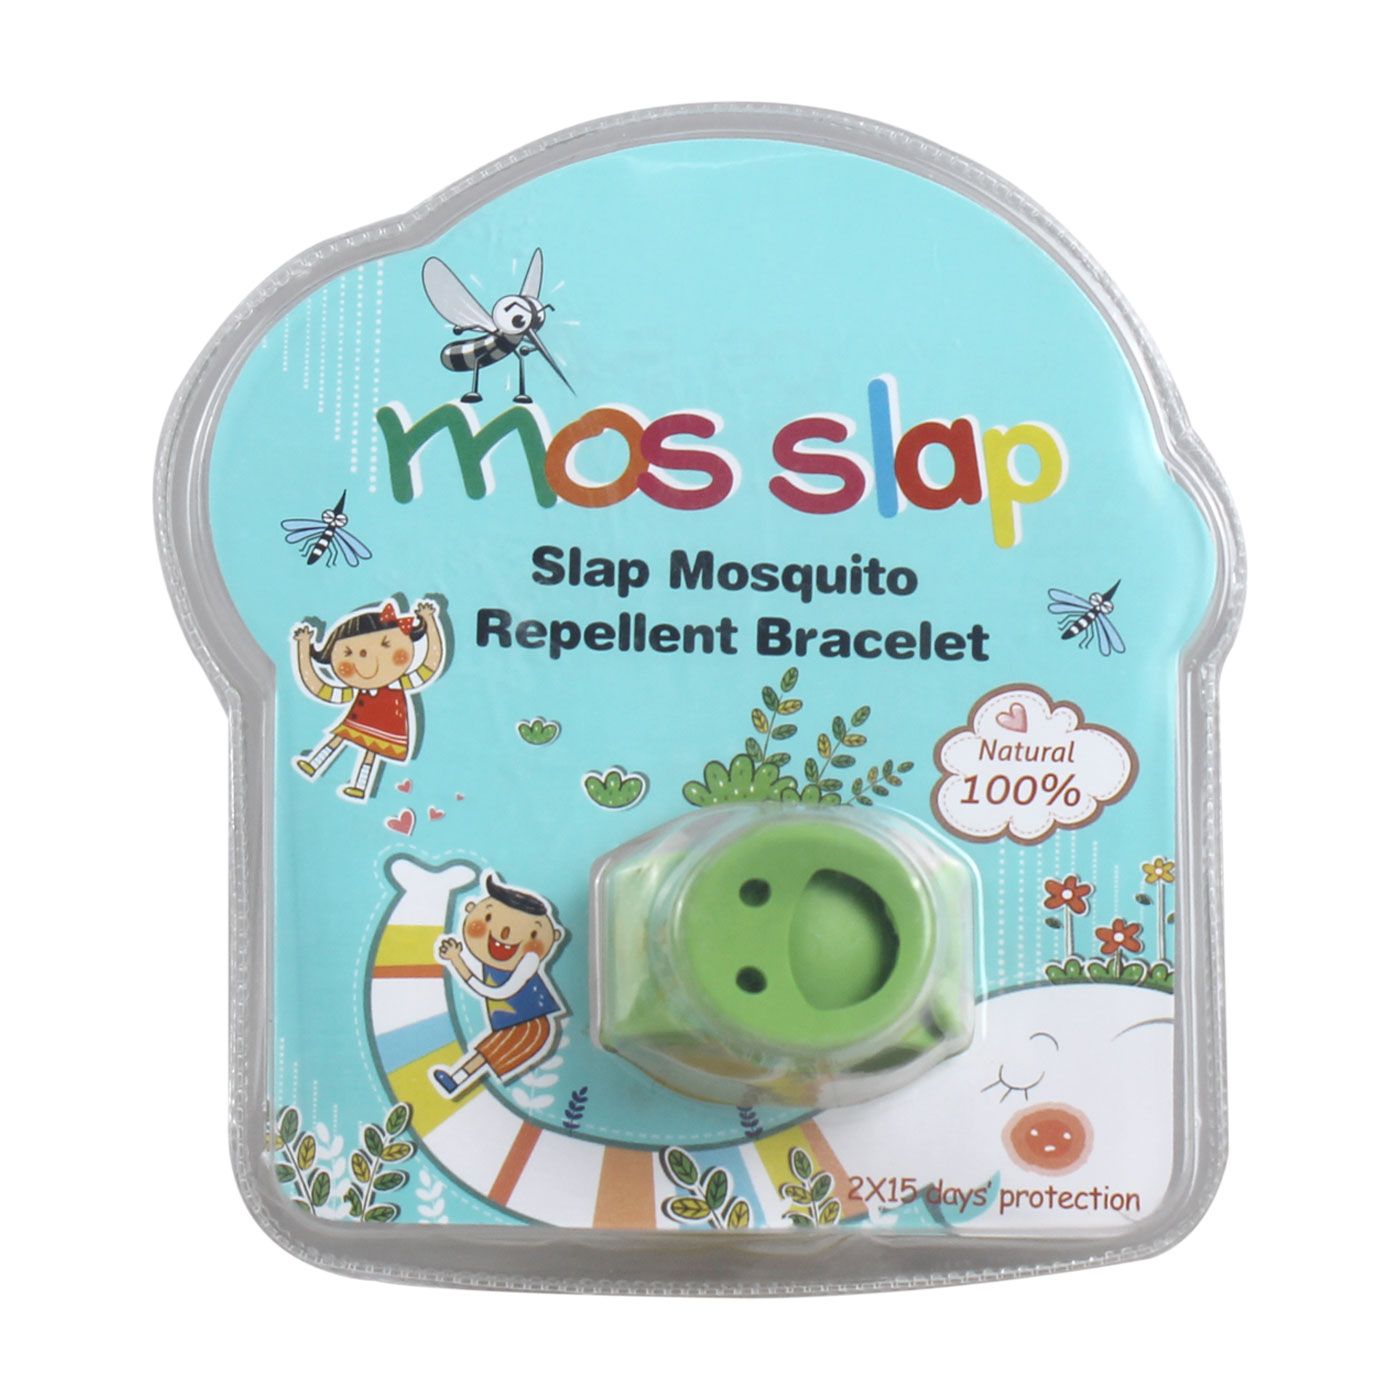 Mosslap Mosquito Repellent Bracelet Smiley Green - 3